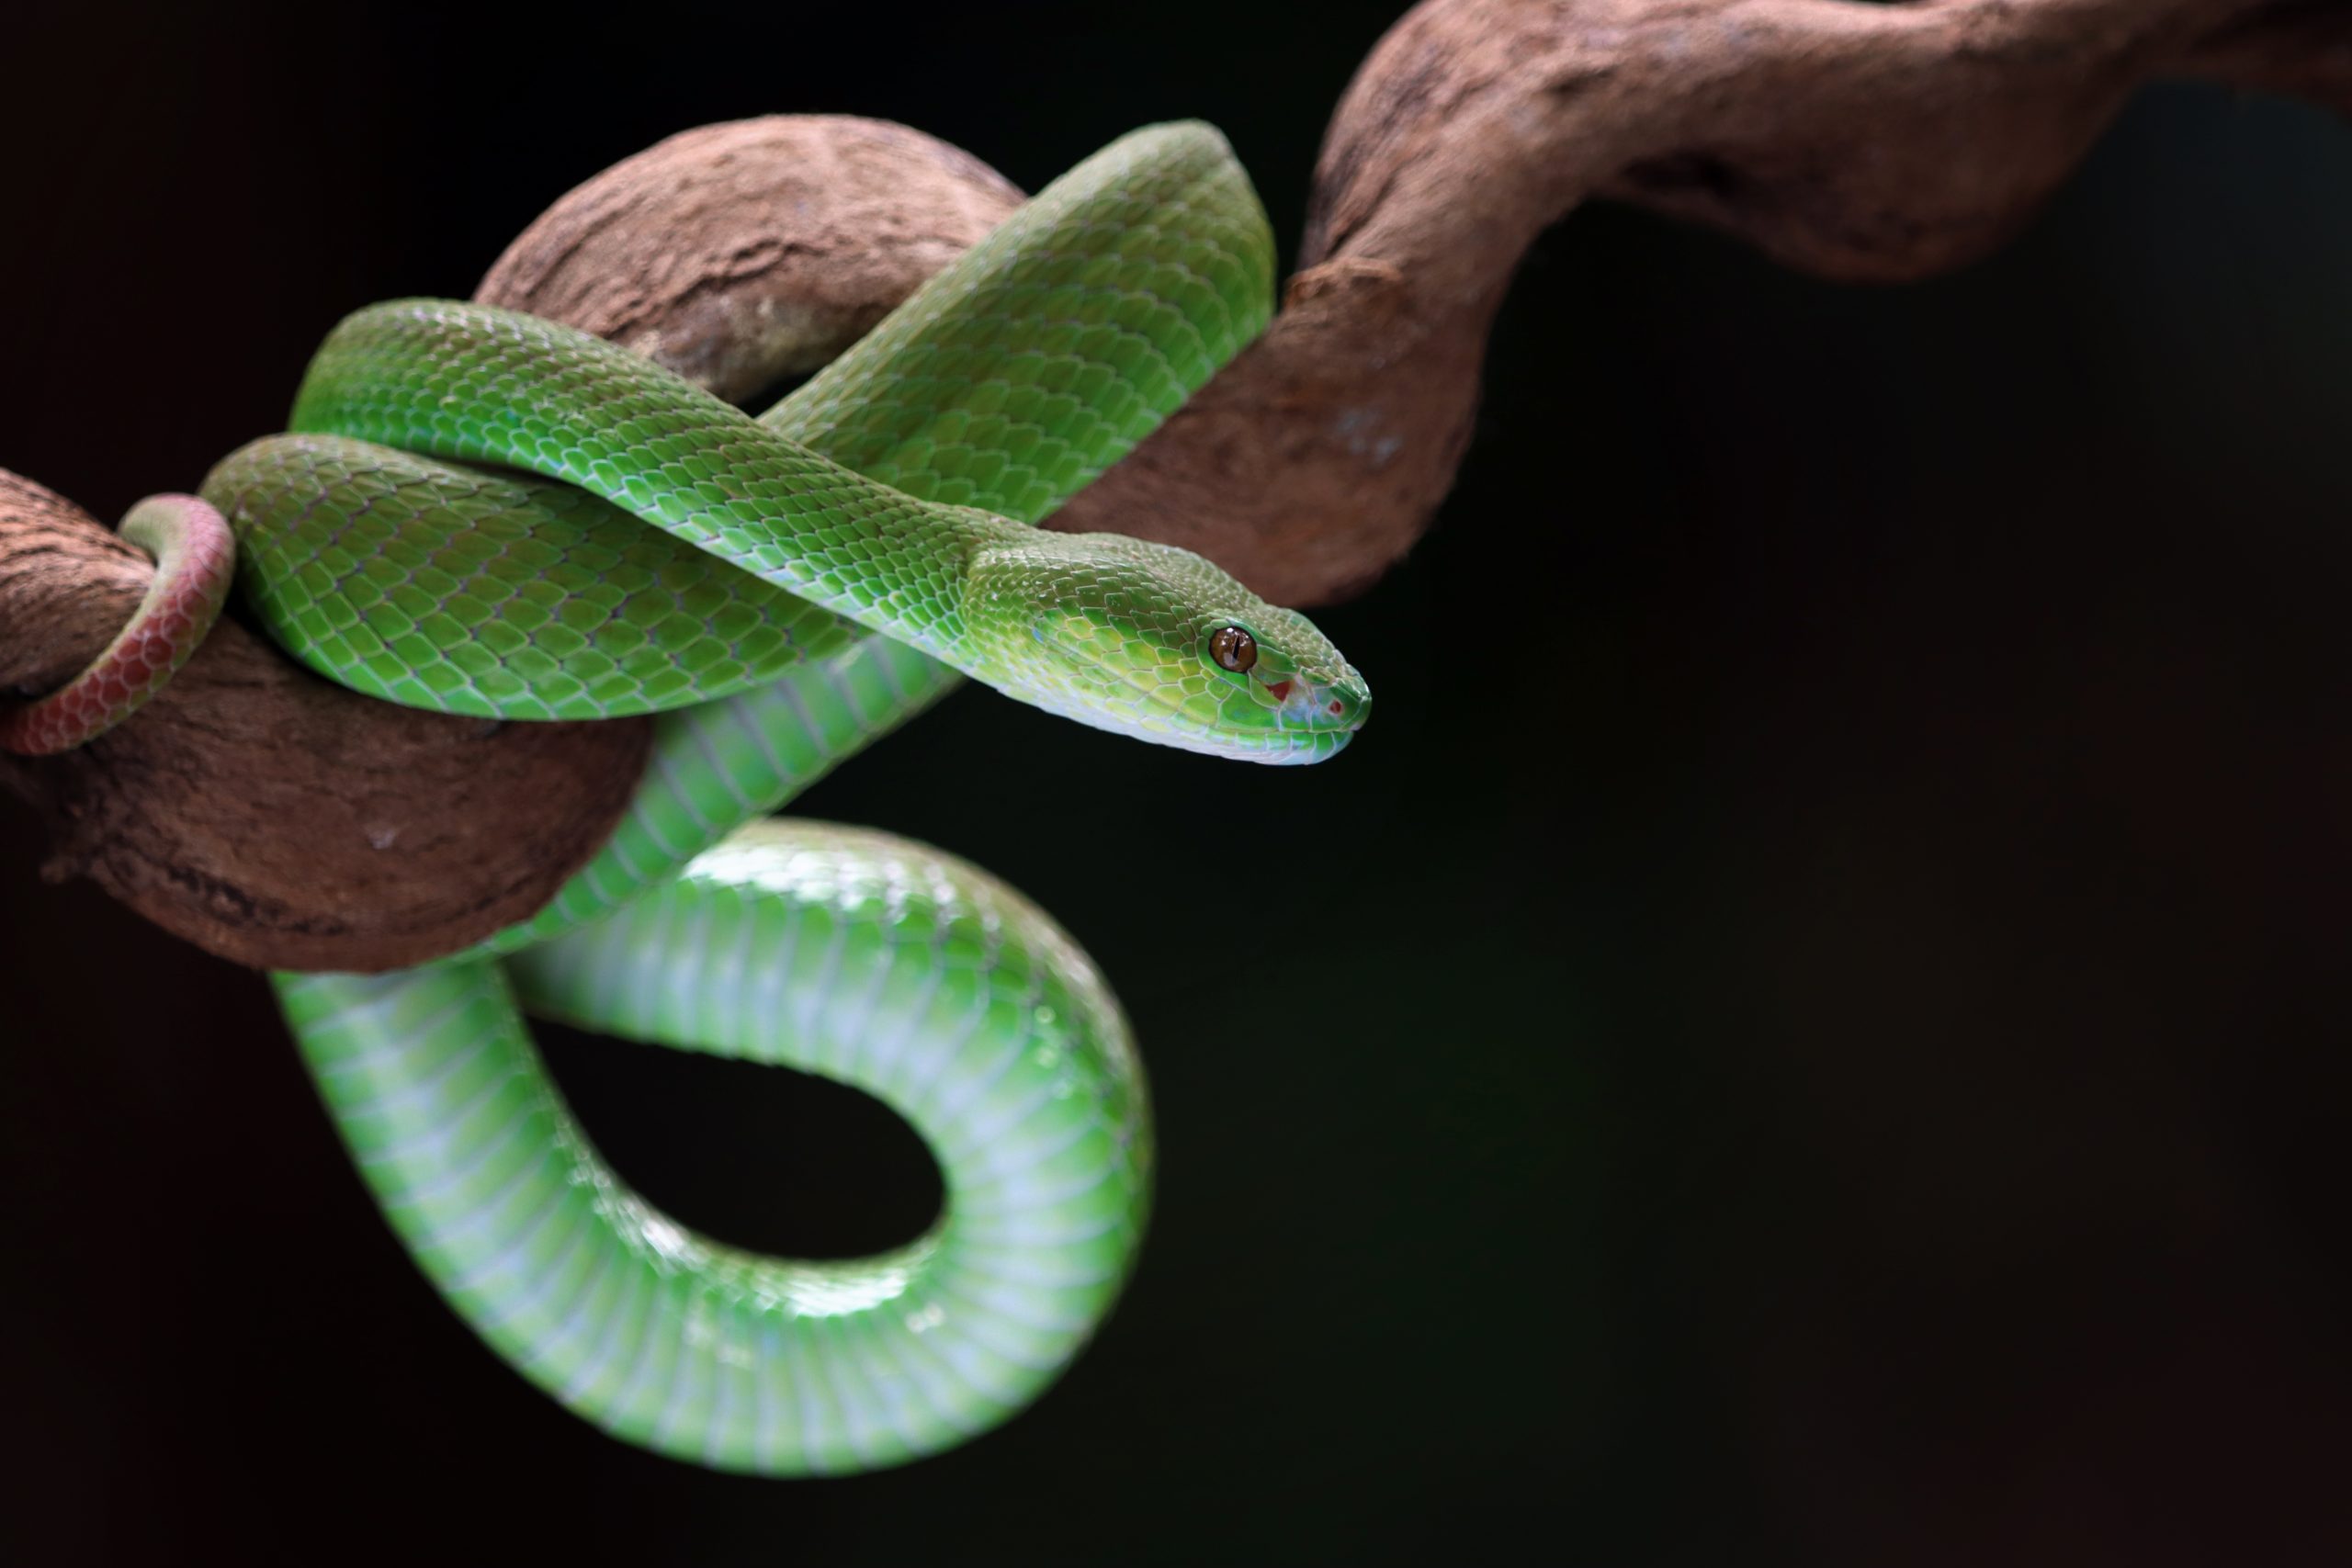 Are green tree pythons venomous?